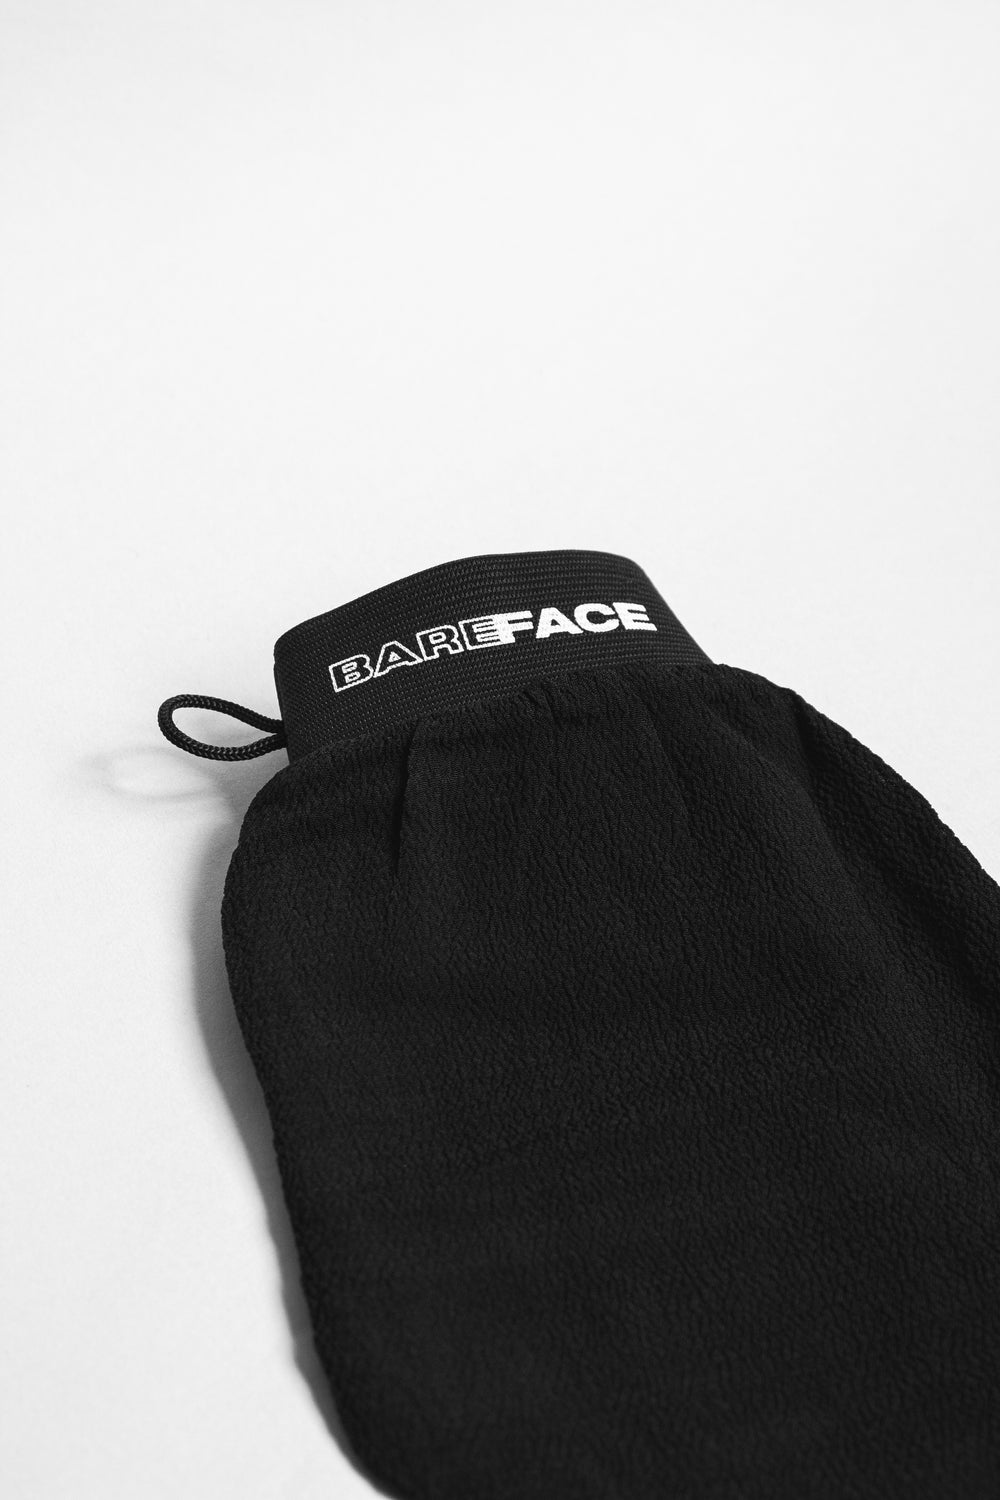 Bareface - Exfoliating Glove